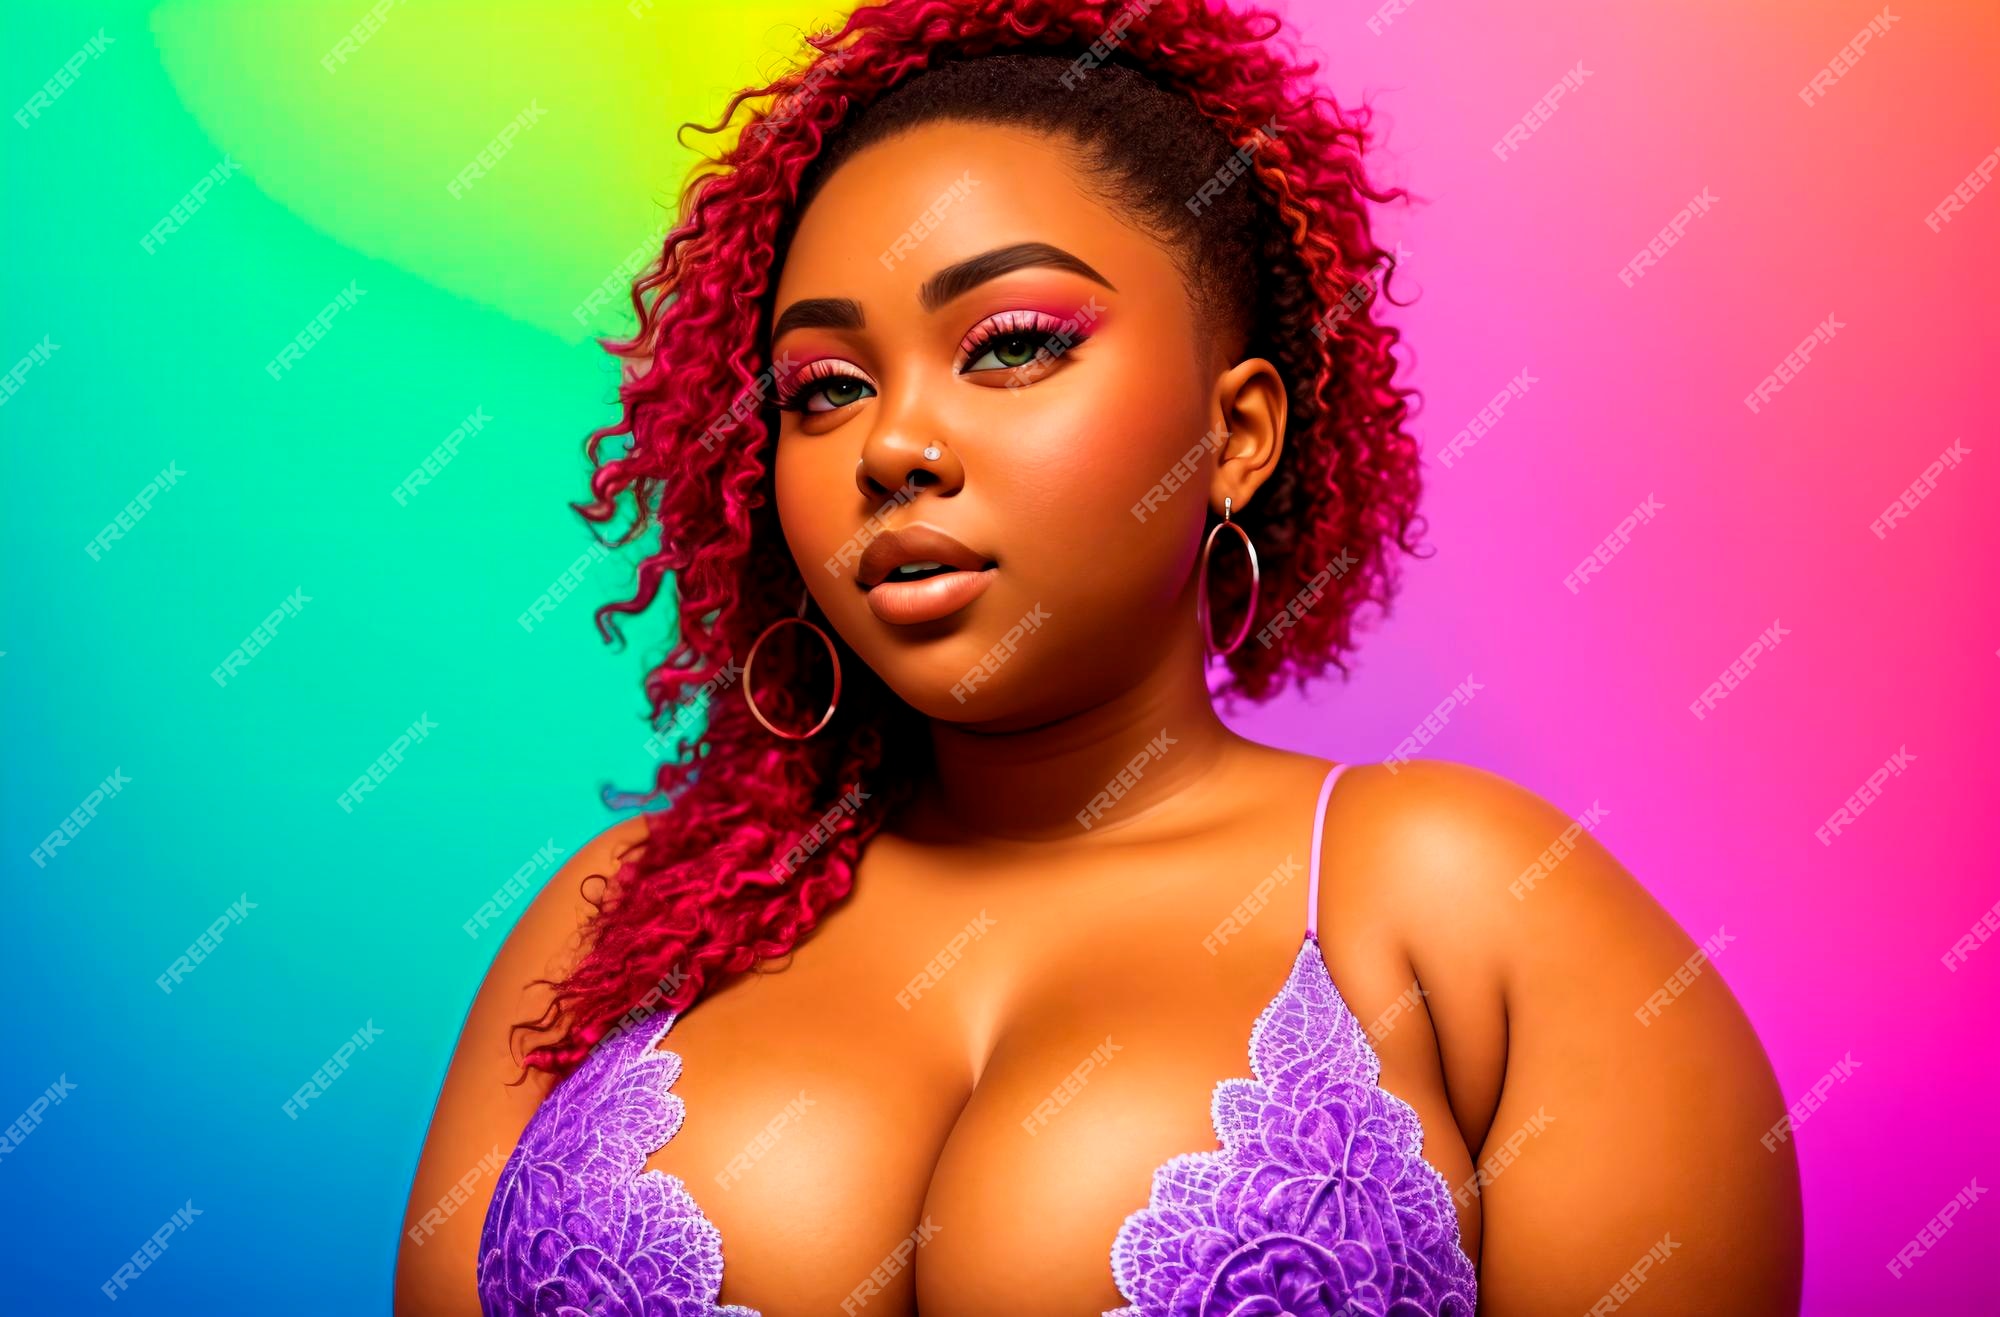 arpita gupta recommends fat black girls boobs pic